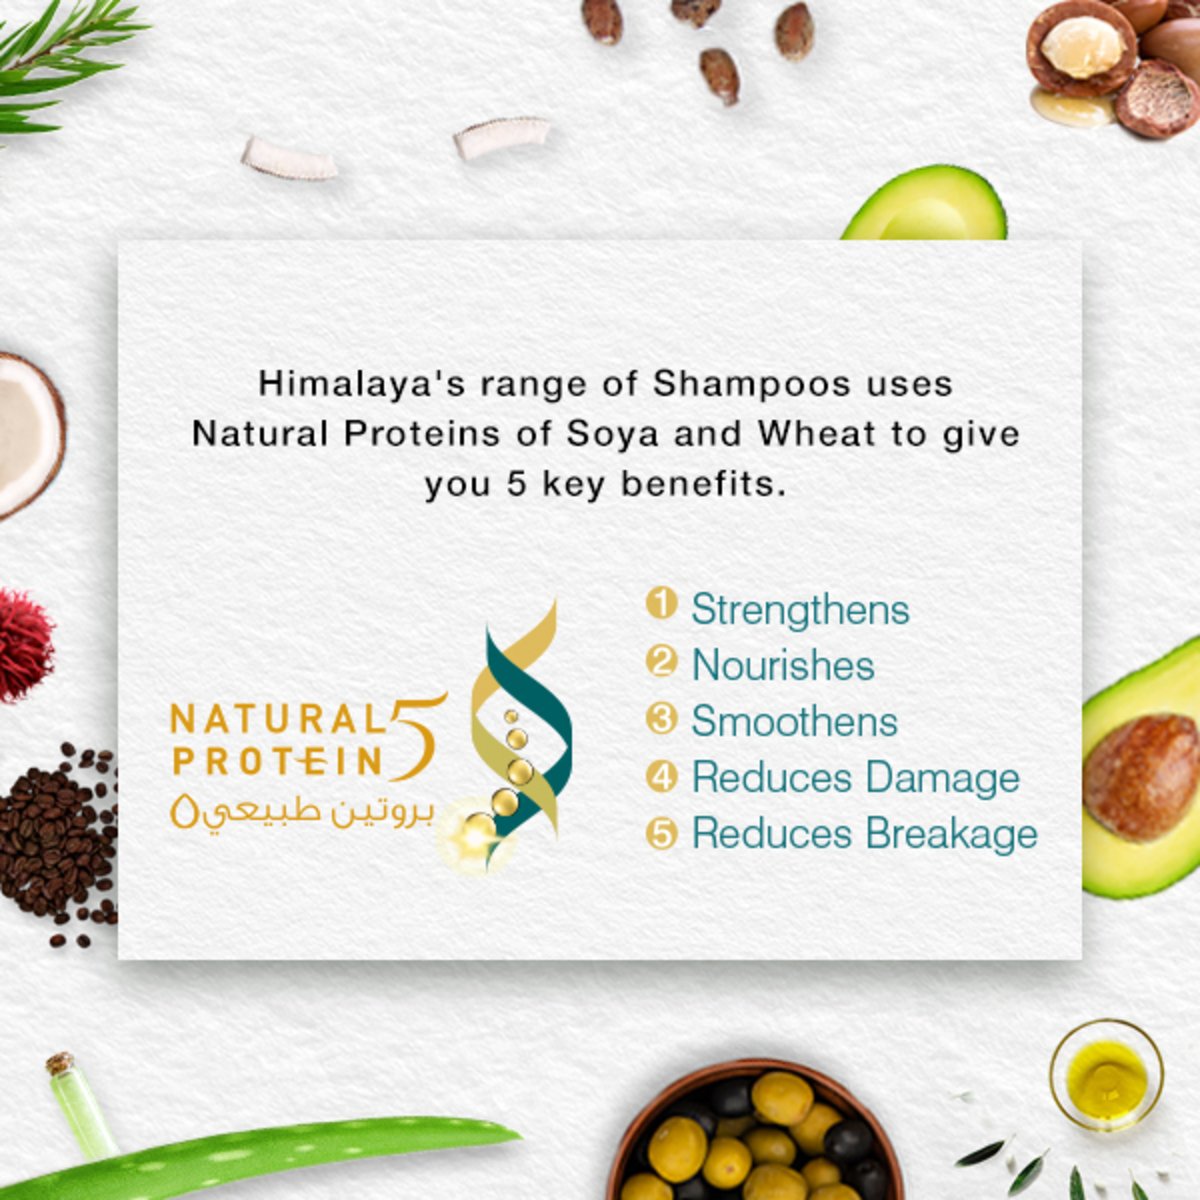 Himalaya Anti-Hairfall Shampoo Value Pack 2 x 400 ml